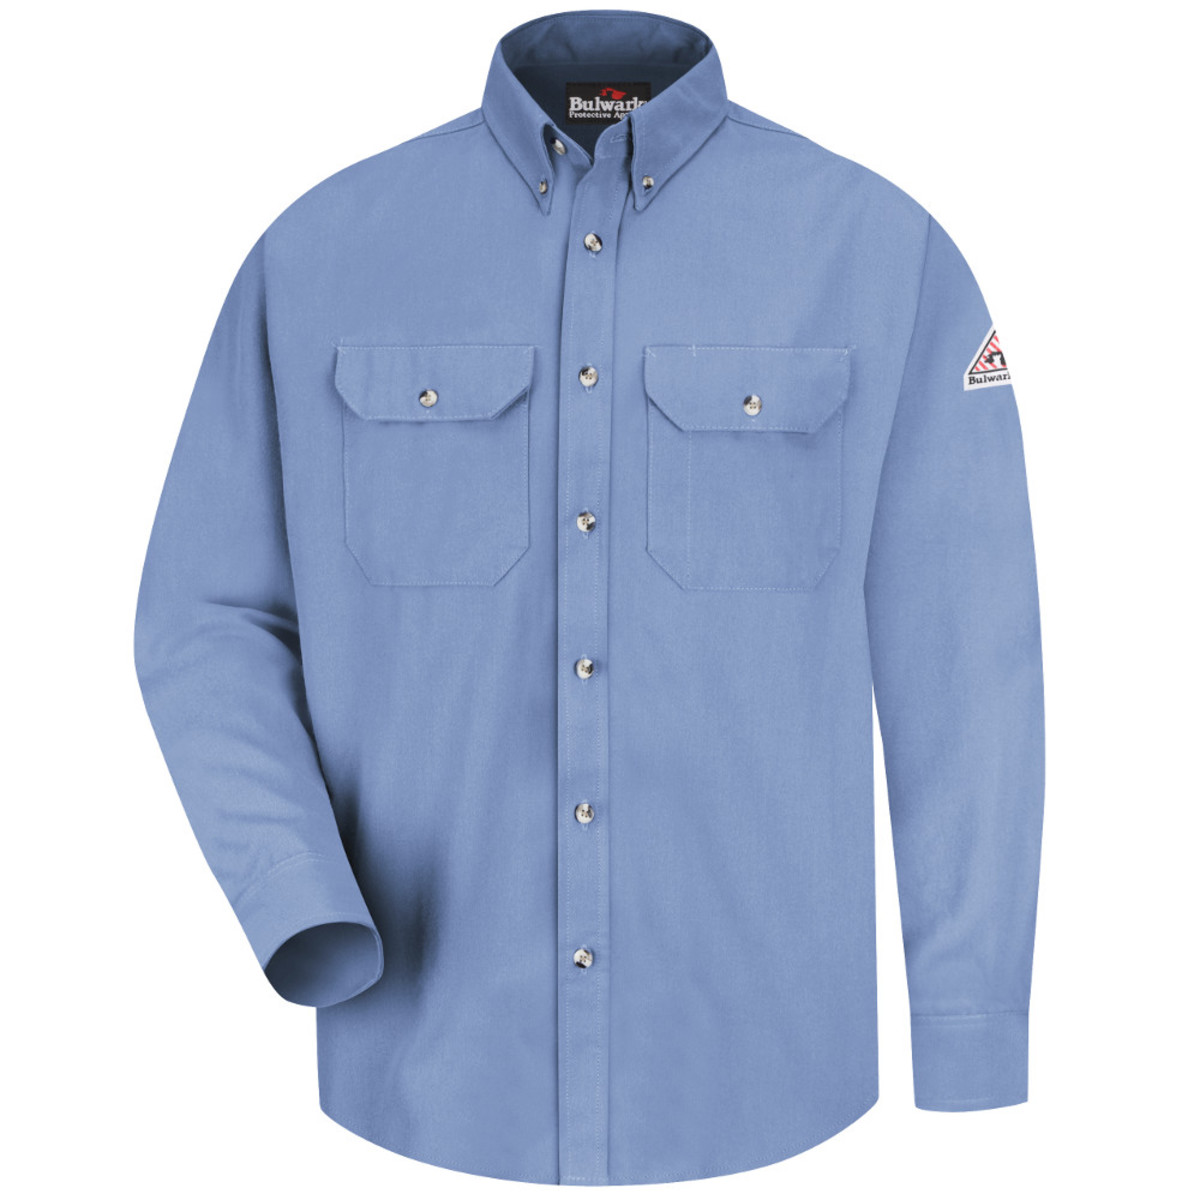 Bulwark® 2X X-Tall Light Blue Modacrylic/Lyocell/Aramid Flame Resistant Dress Uniform Shirt With Button Front Closure